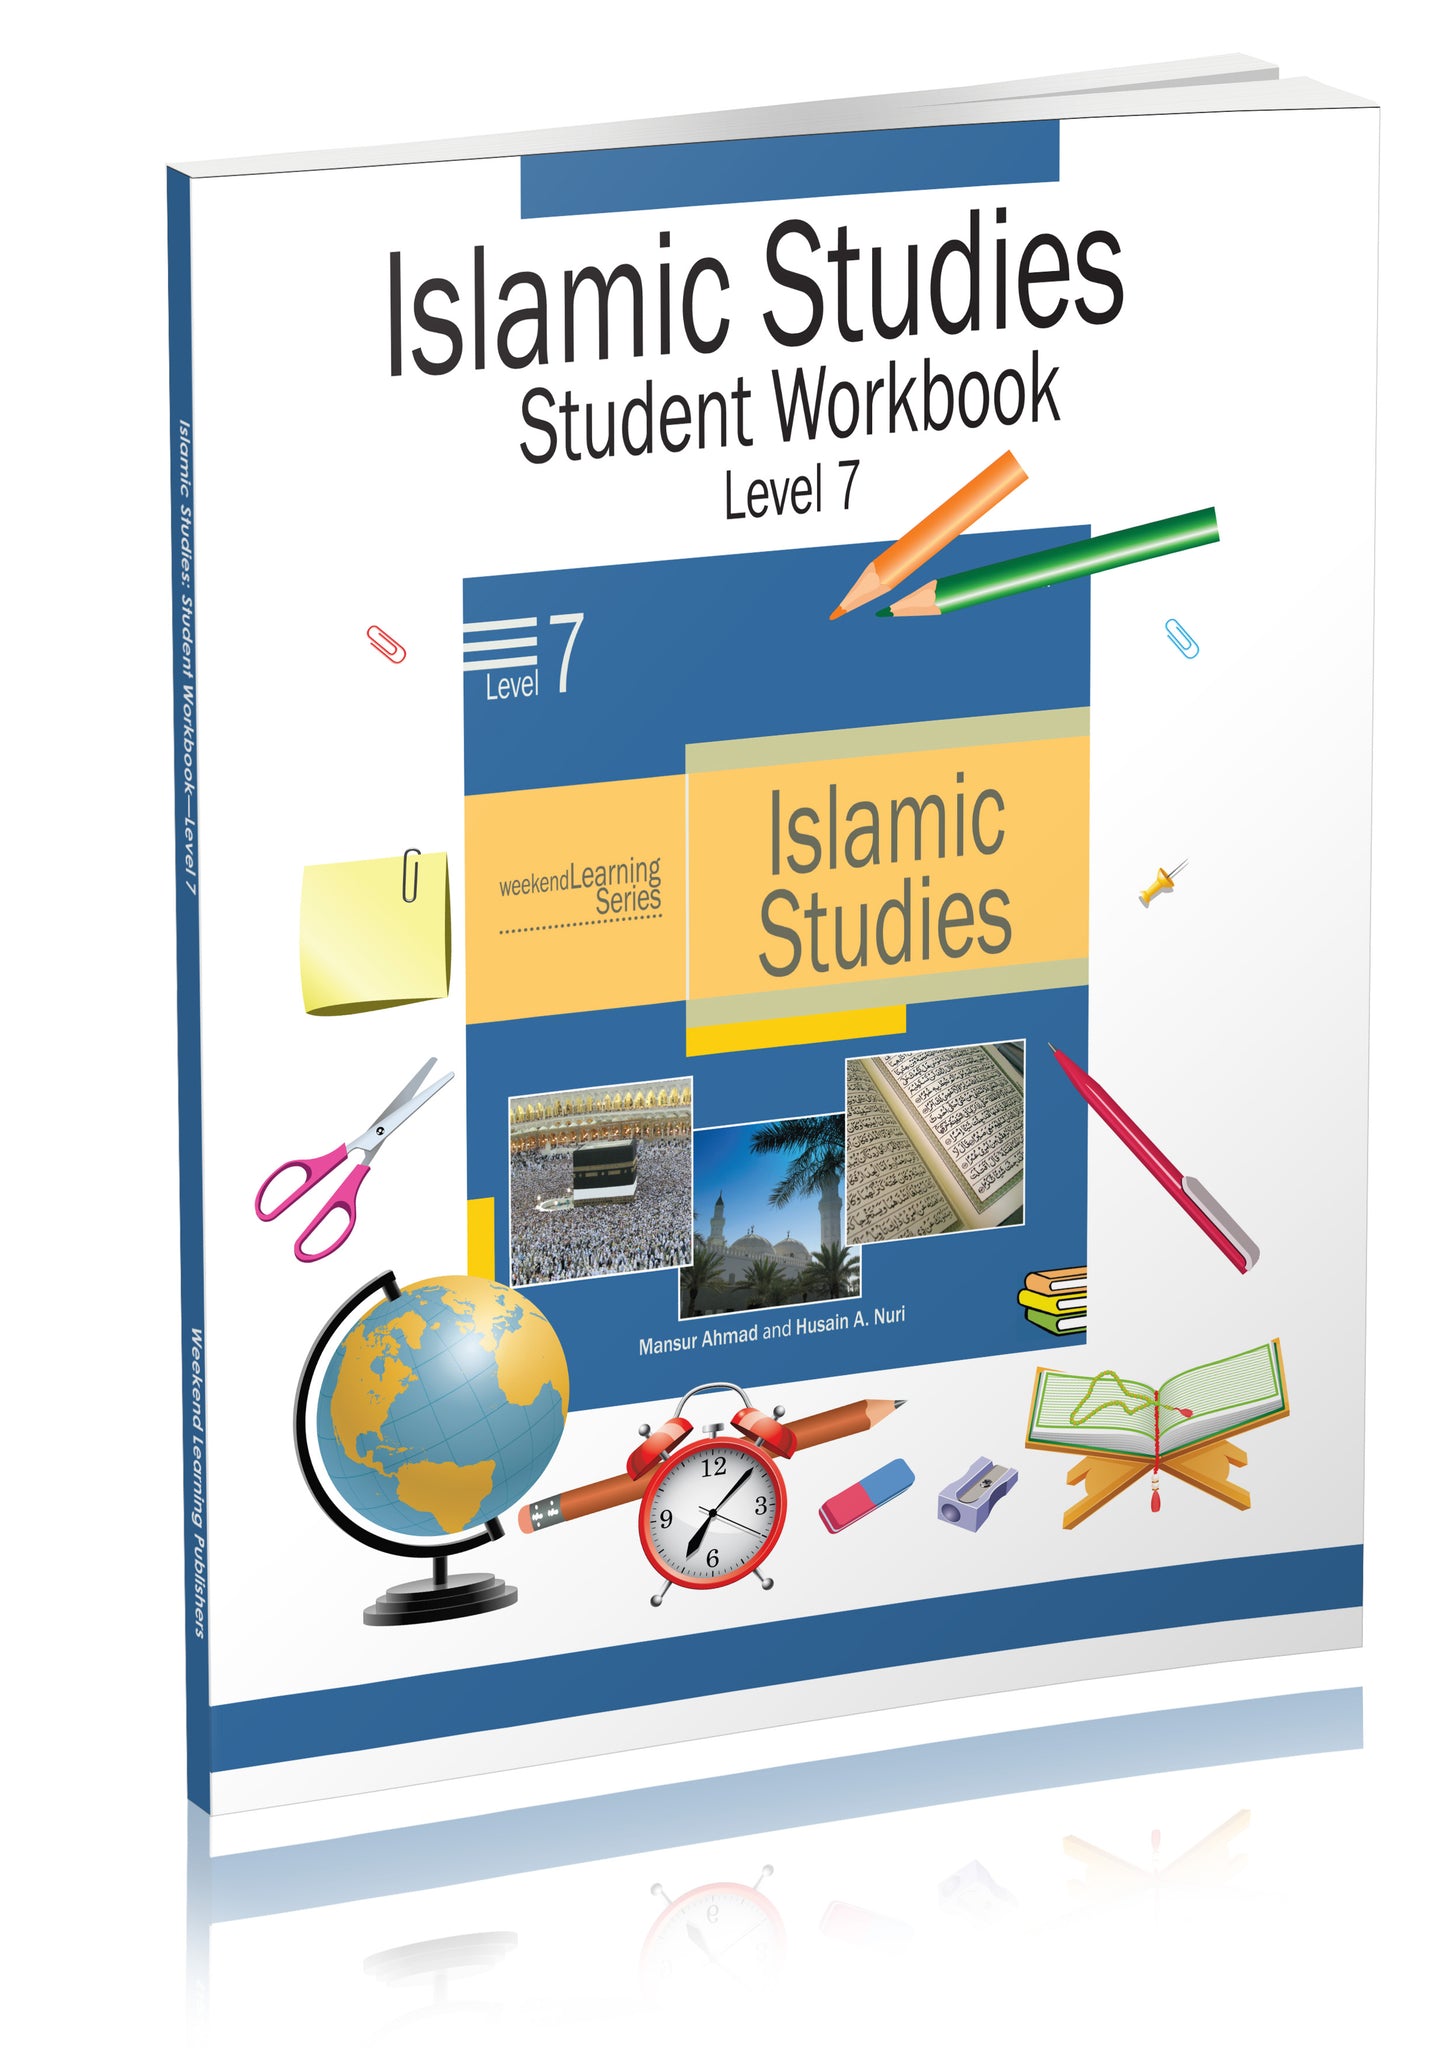 Student Workbook - Islamic Studies Level 7